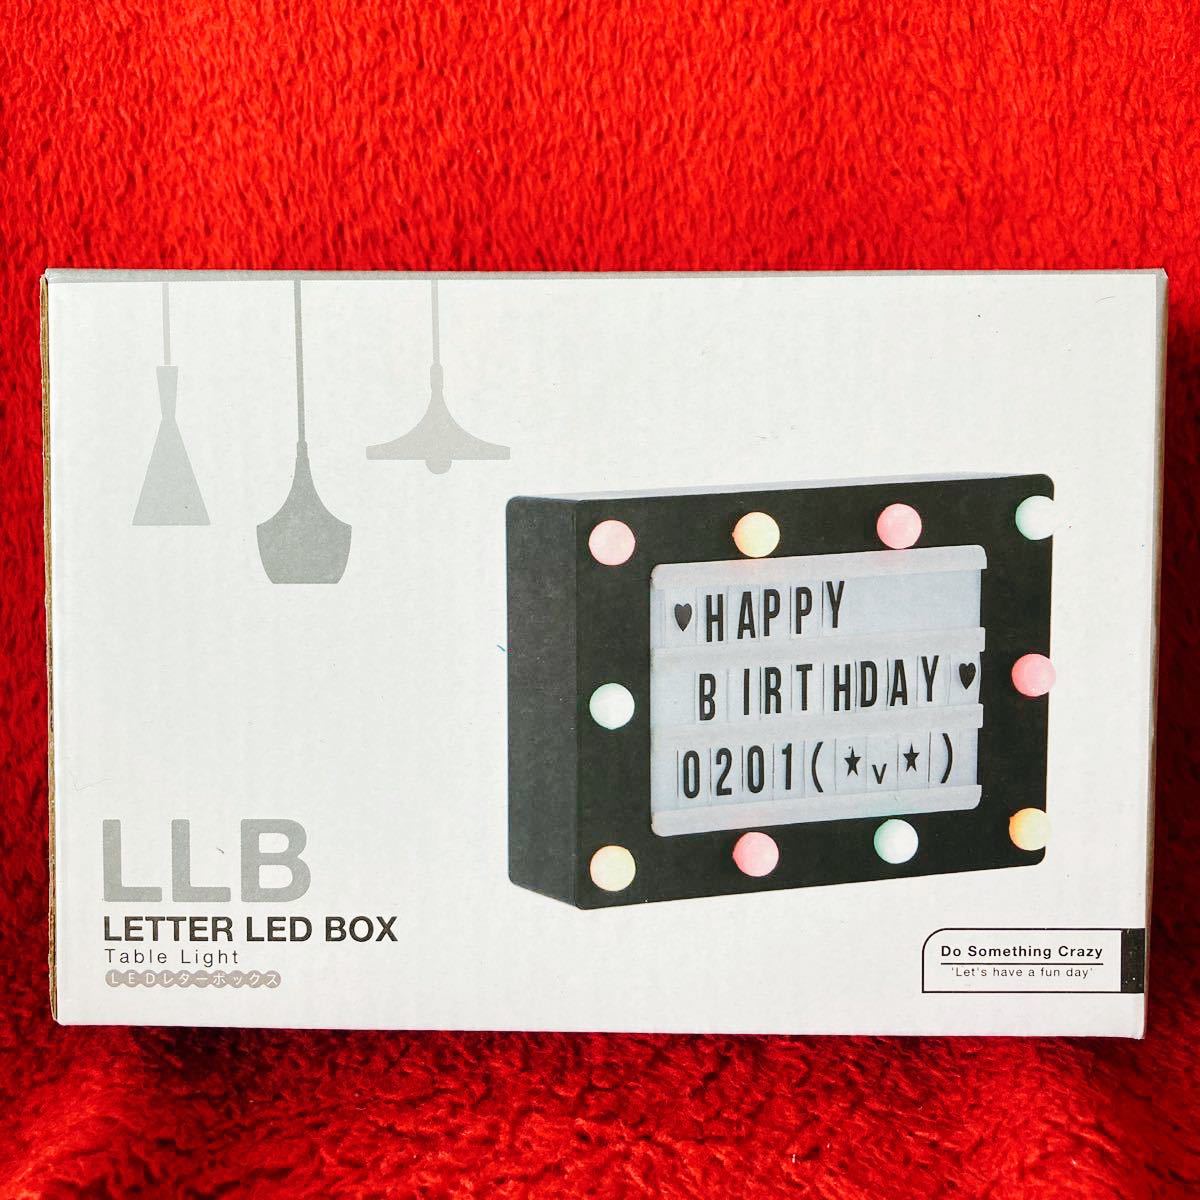 LETTER LED BOX メッセージボード